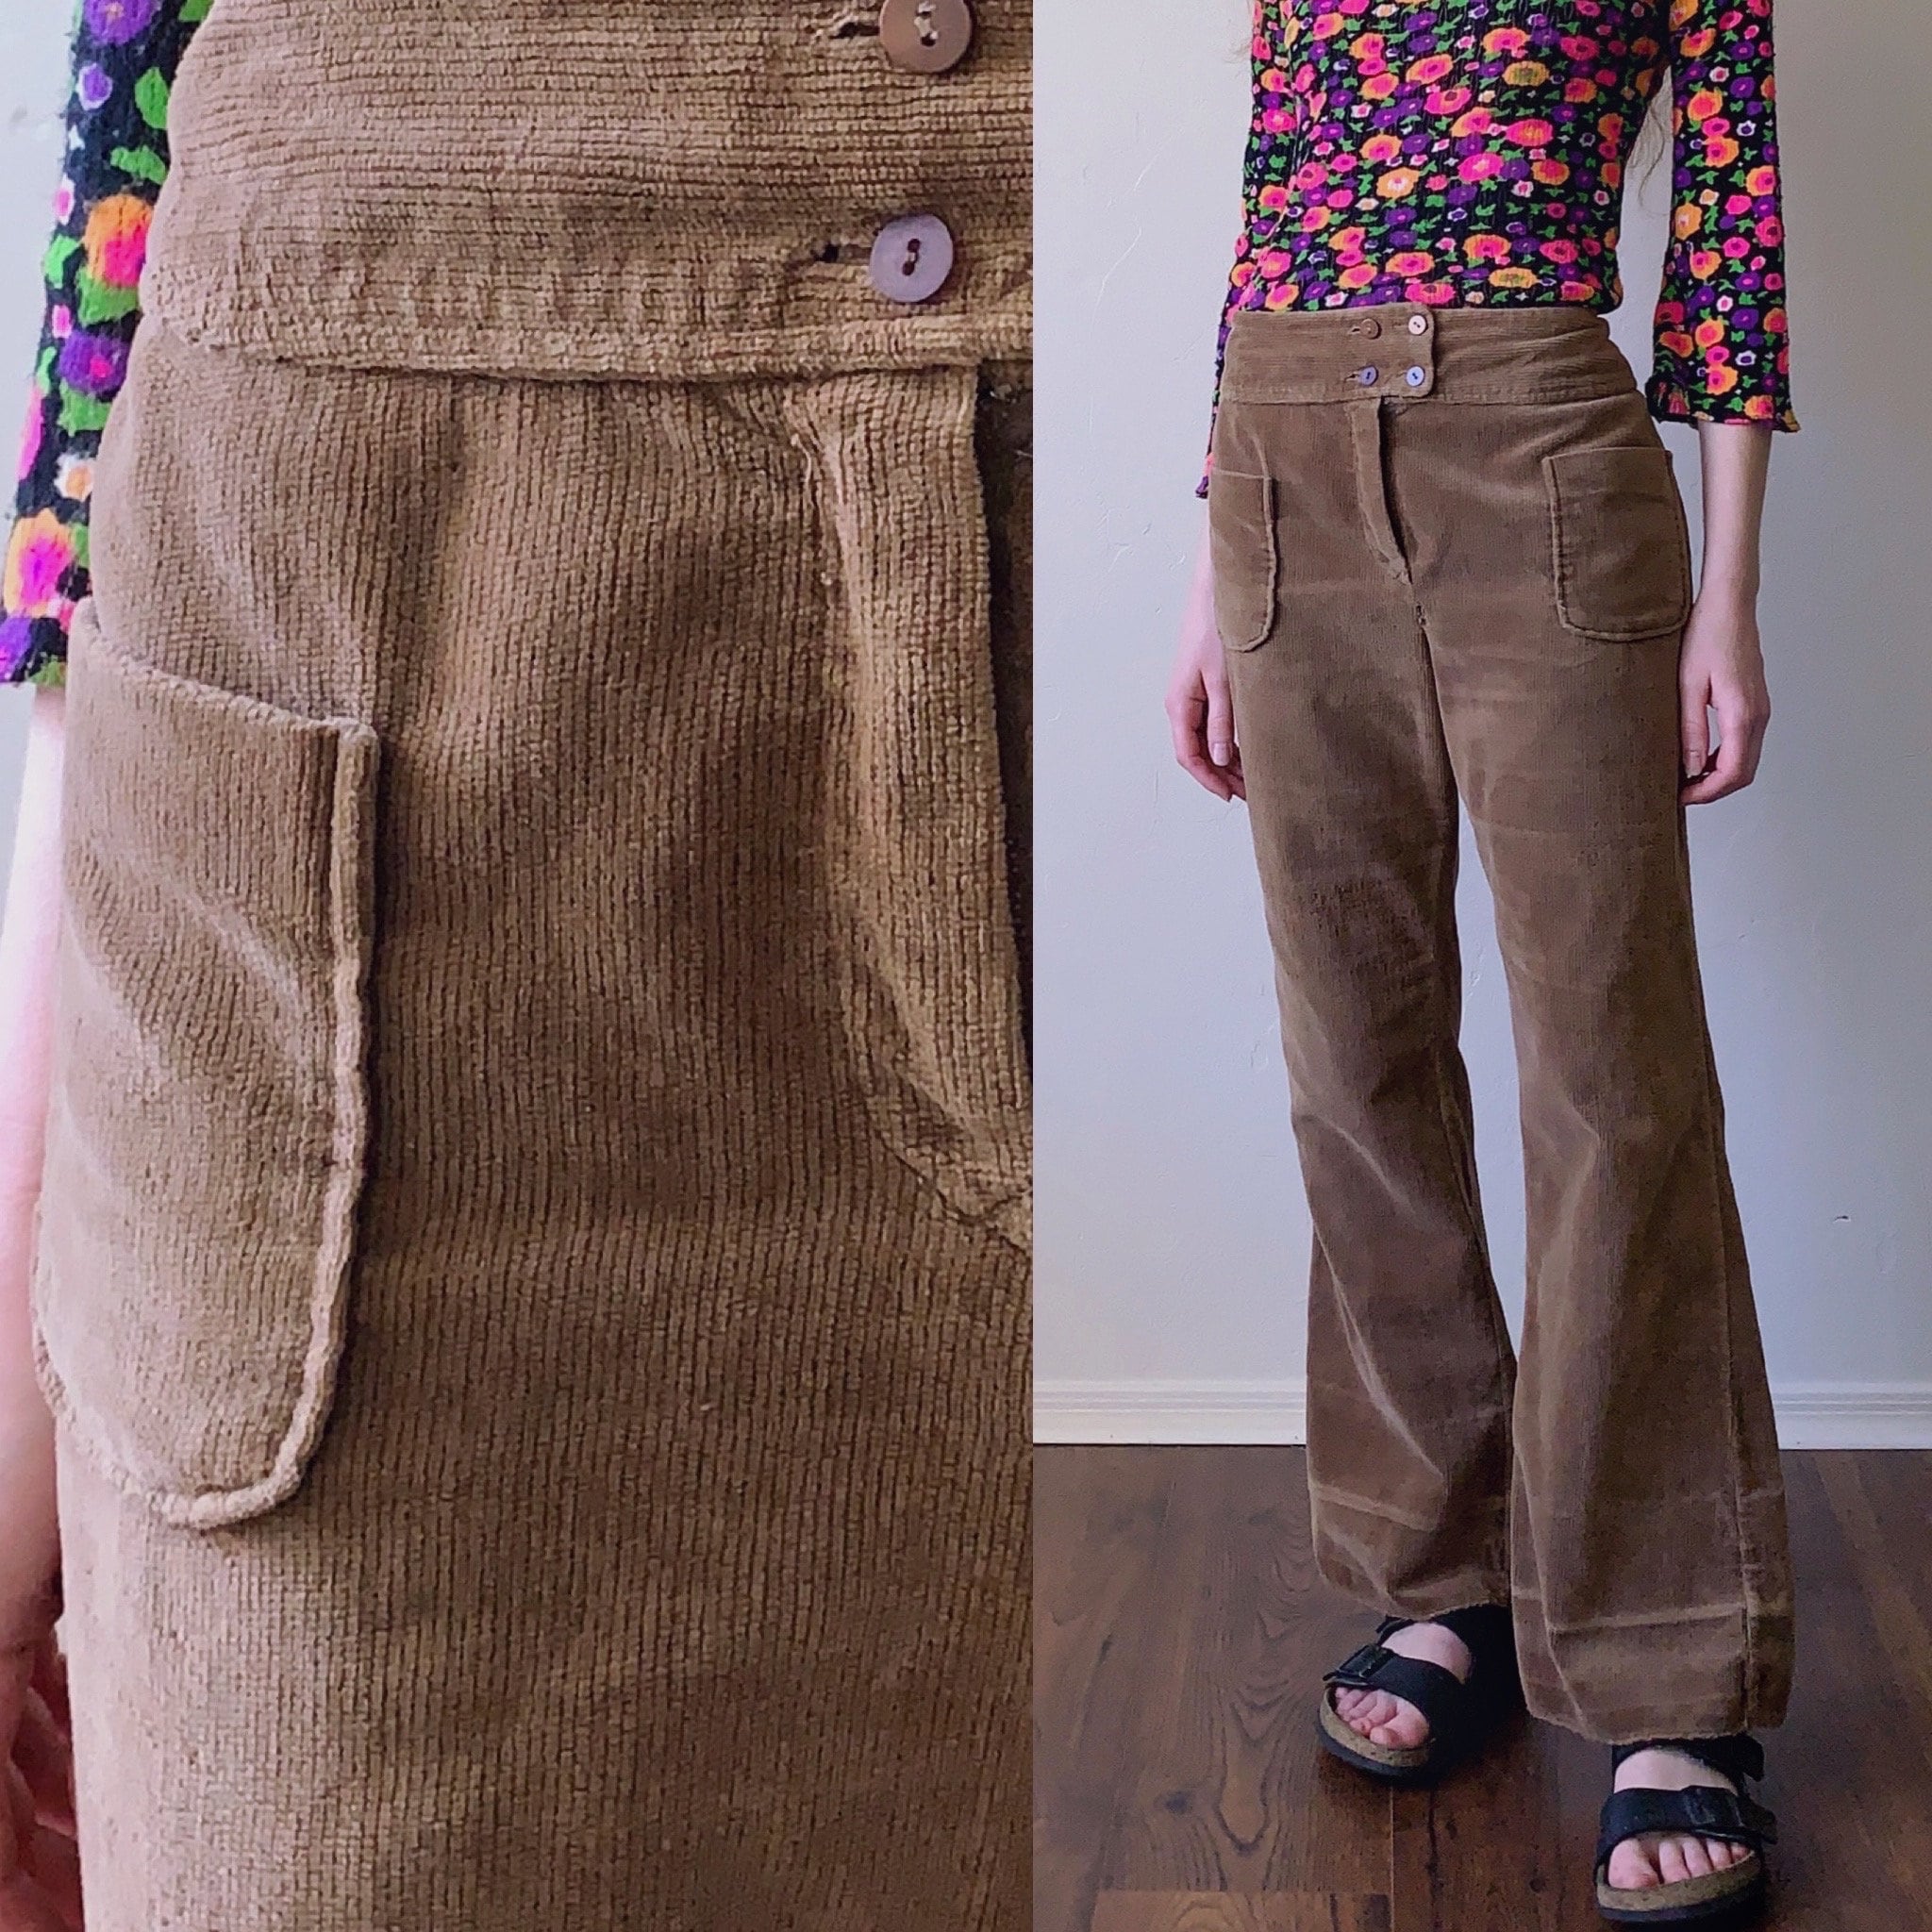 Hfyihgf Women Elegant Corduroy Flare Pants Elastic High Waist Vintage Bell  Bottom Trousers with Pockets(Army Green,S)